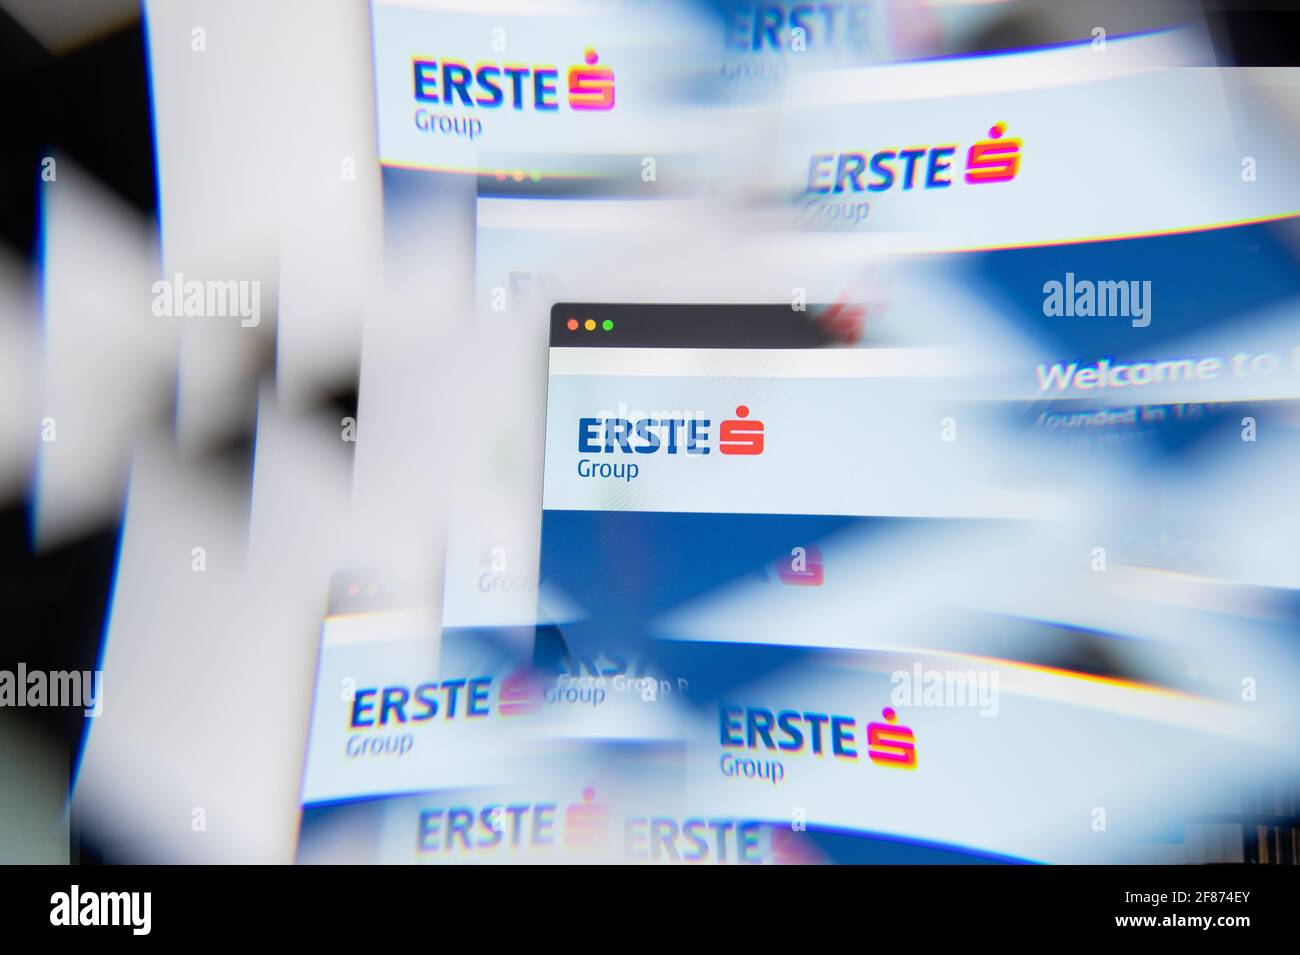 Milan, Italy - APRIL 10, 2021: Erste Bank logo on laptop screen seen through an optical prism. Illustrative editorial image from Erste Bank website. Stock Photo